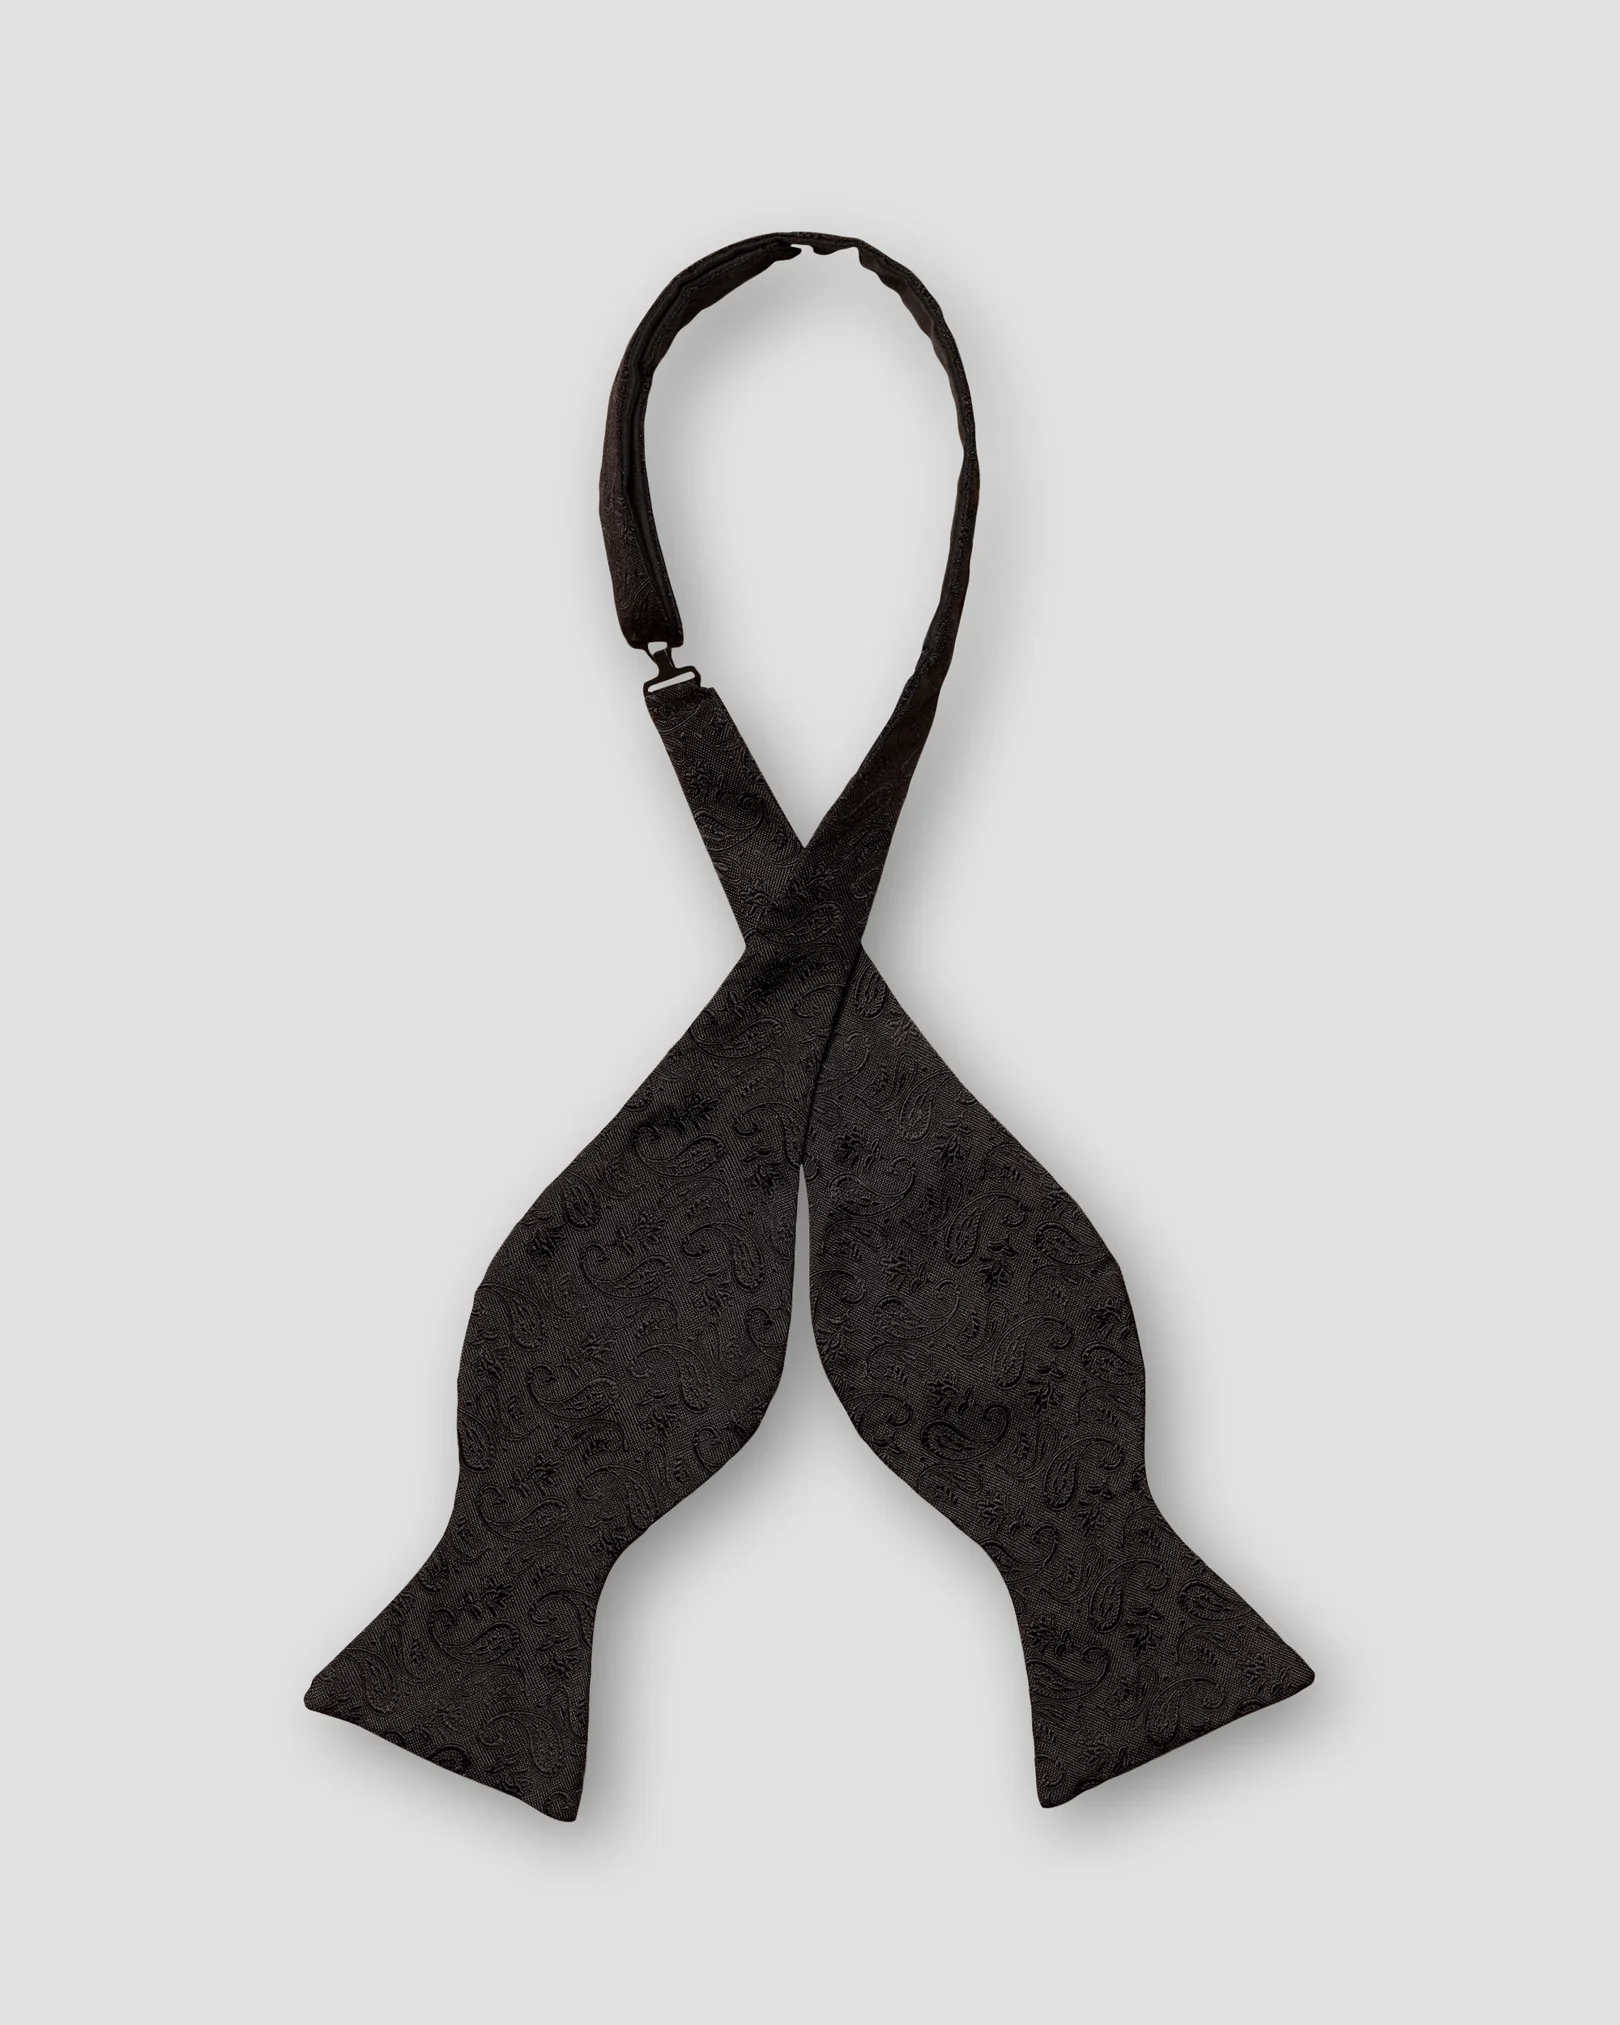 Eton - classic black bow tie self tied